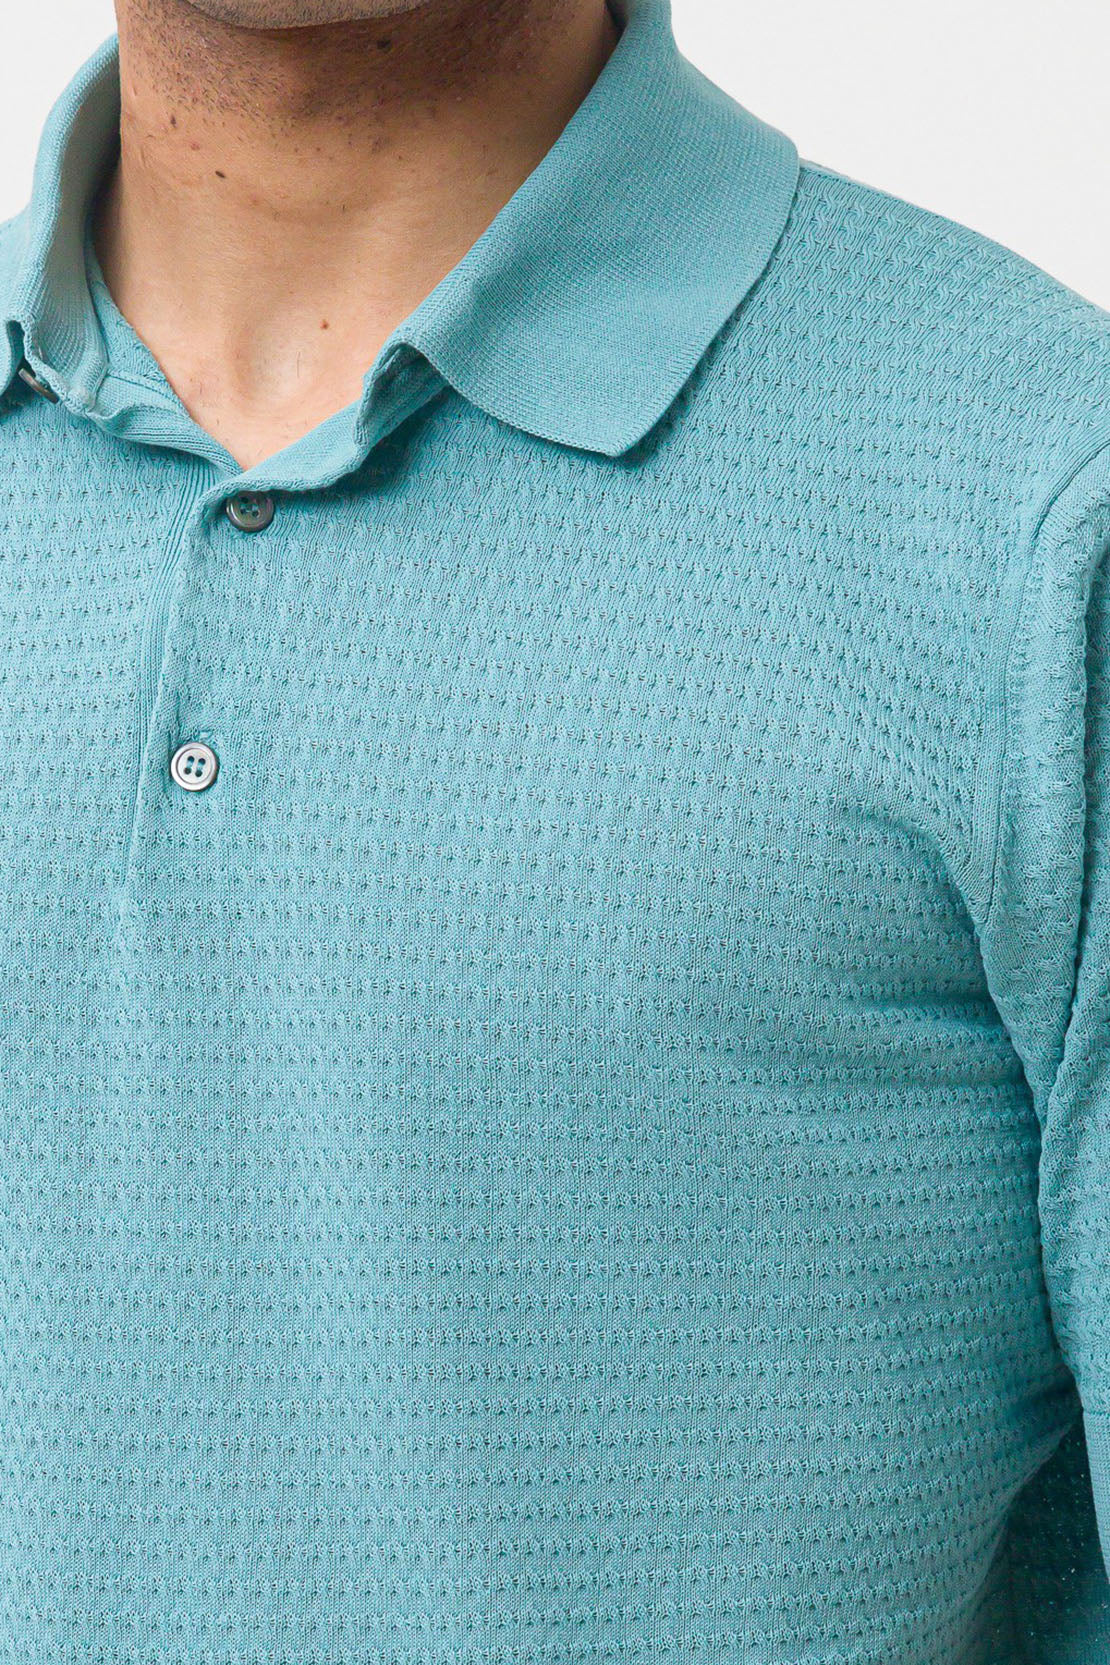 FILIPPO DE LAURENTIIS - Turquoise Woven Polo Shirt in Lightweight Crepe Cotton